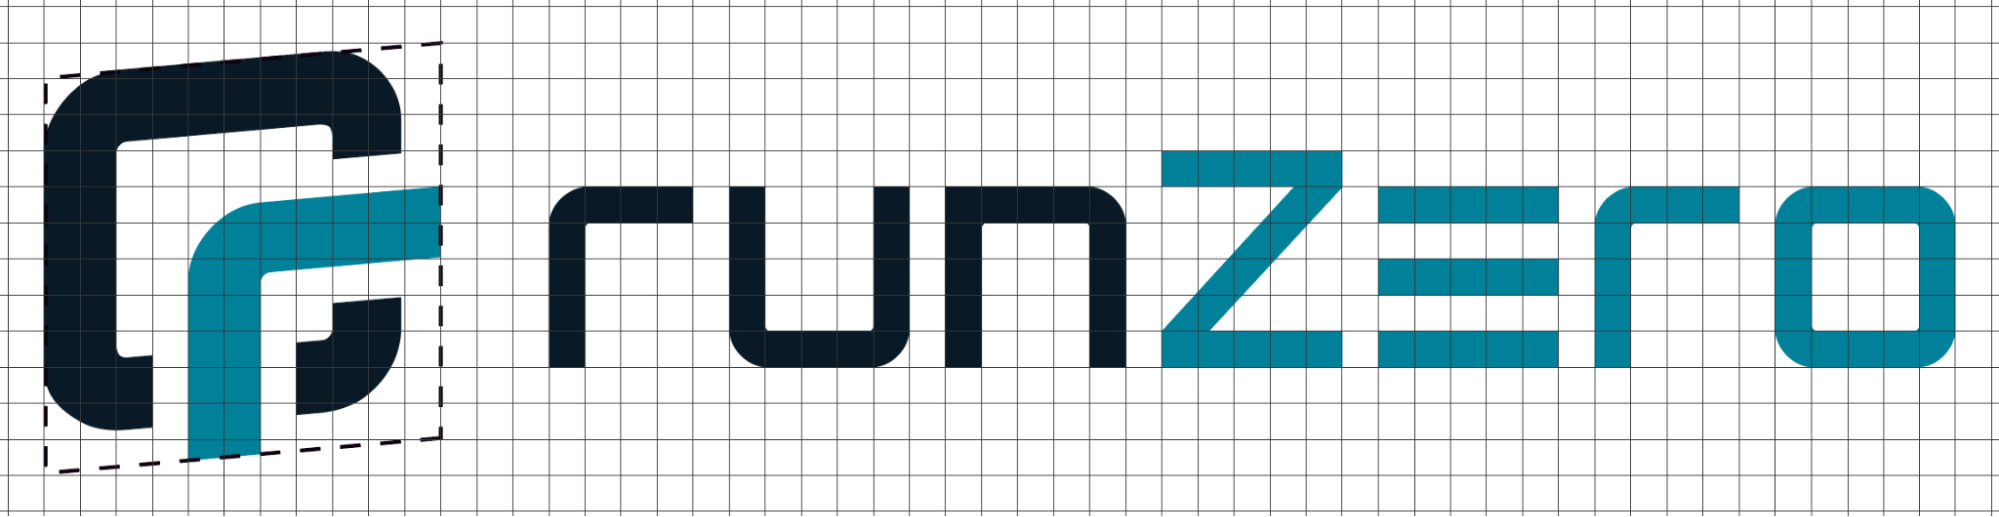 pixel grid with runZero logo